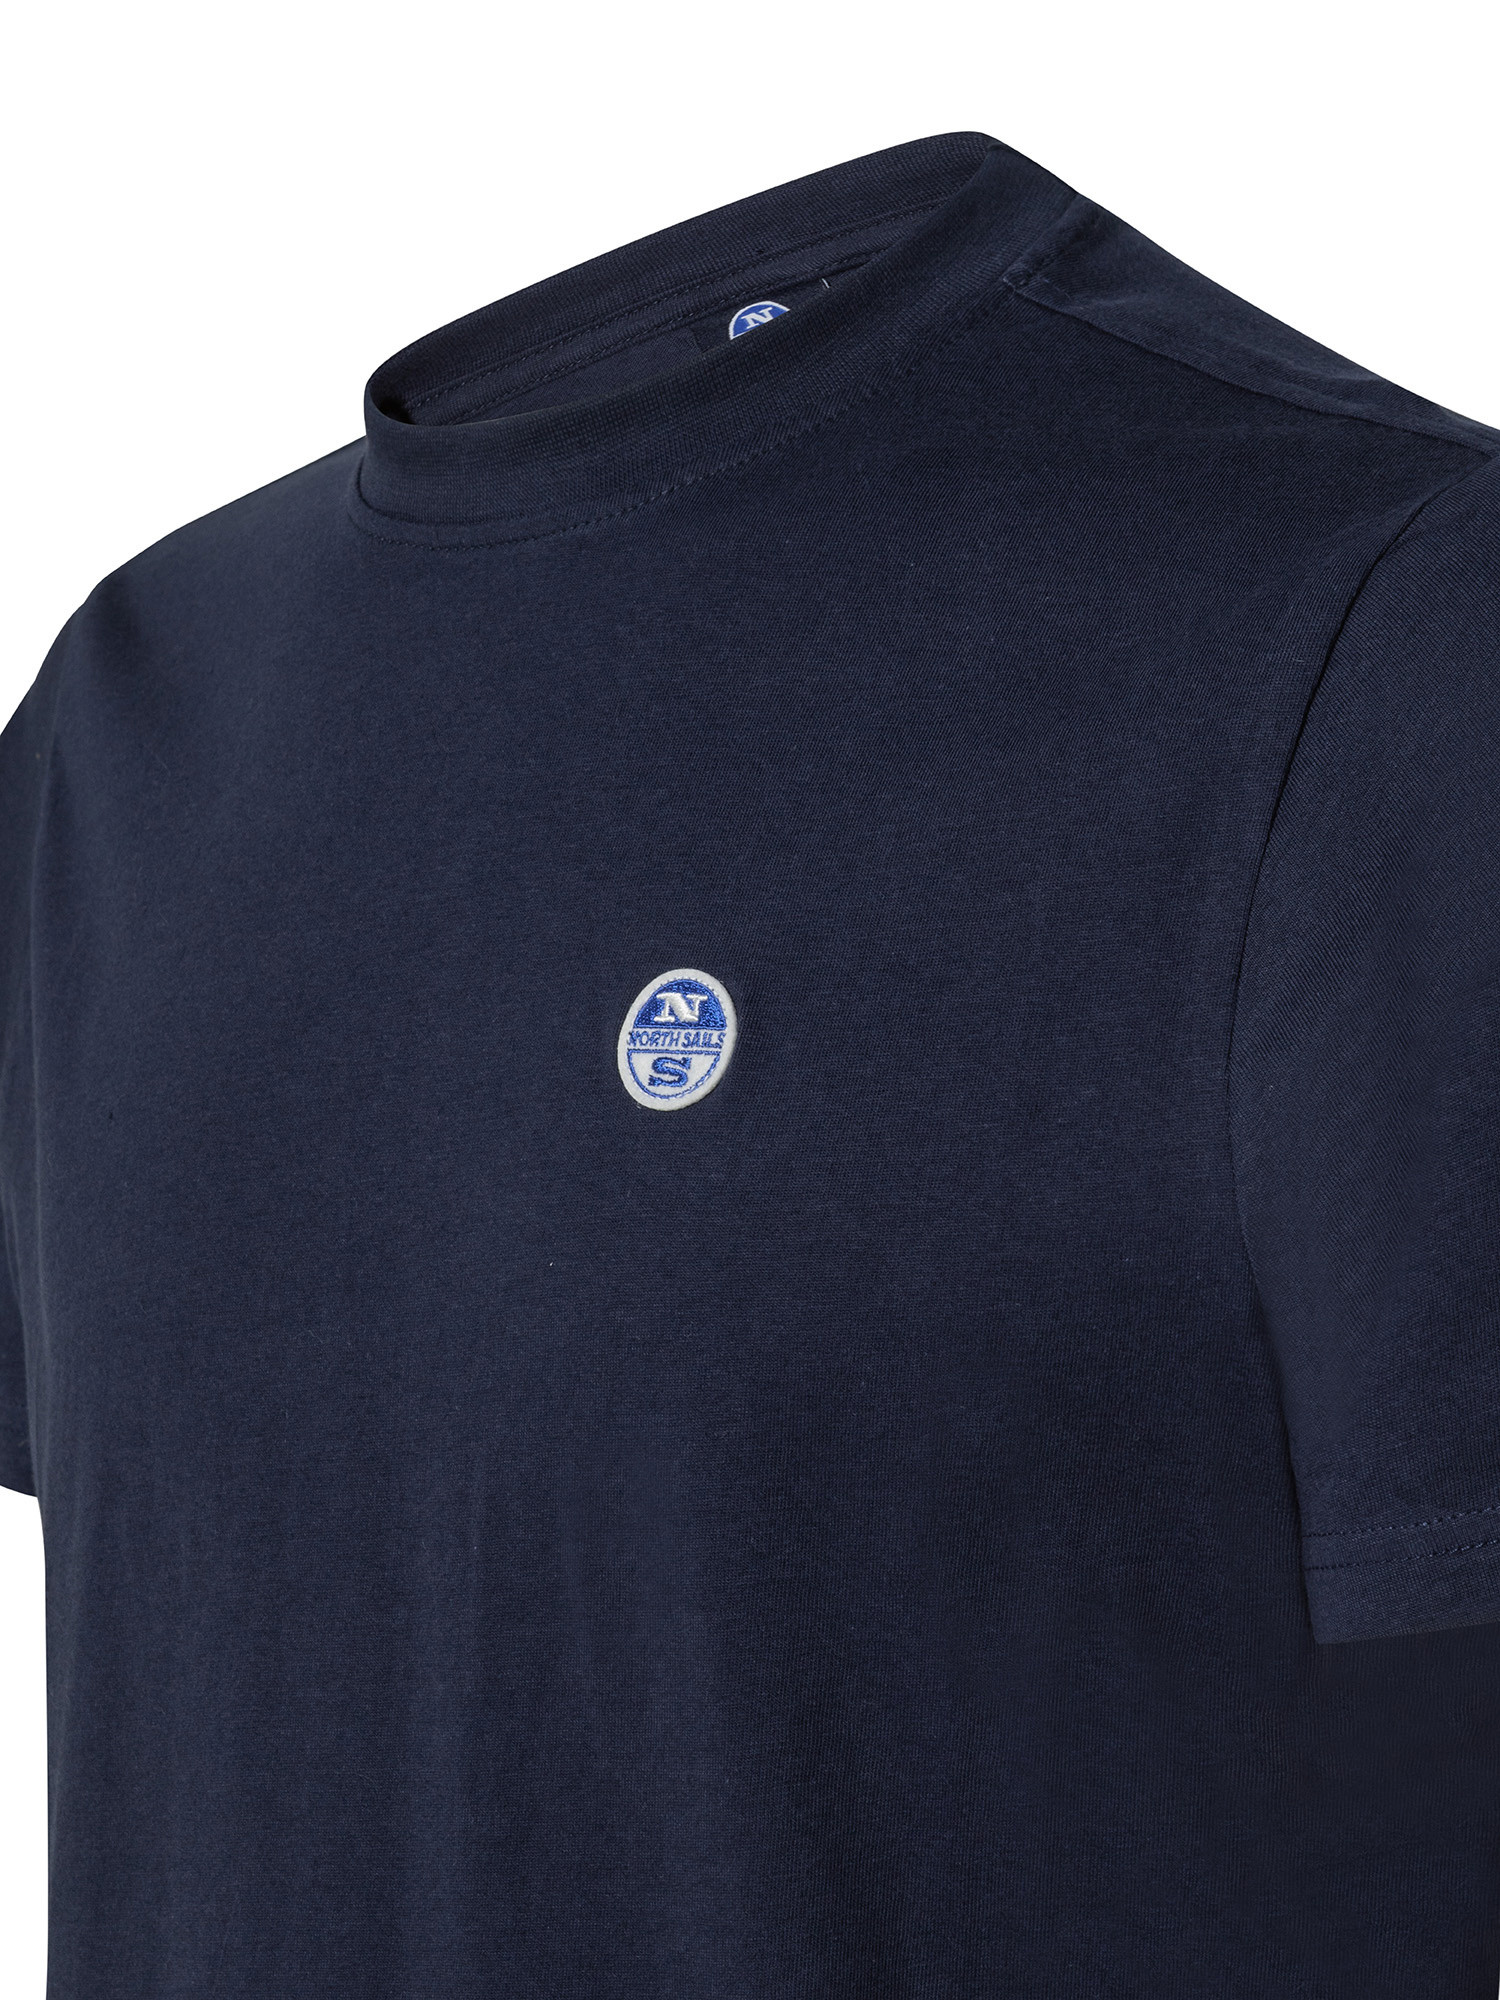 T-shirt a maniche corte con logo, Blu, large image number 2